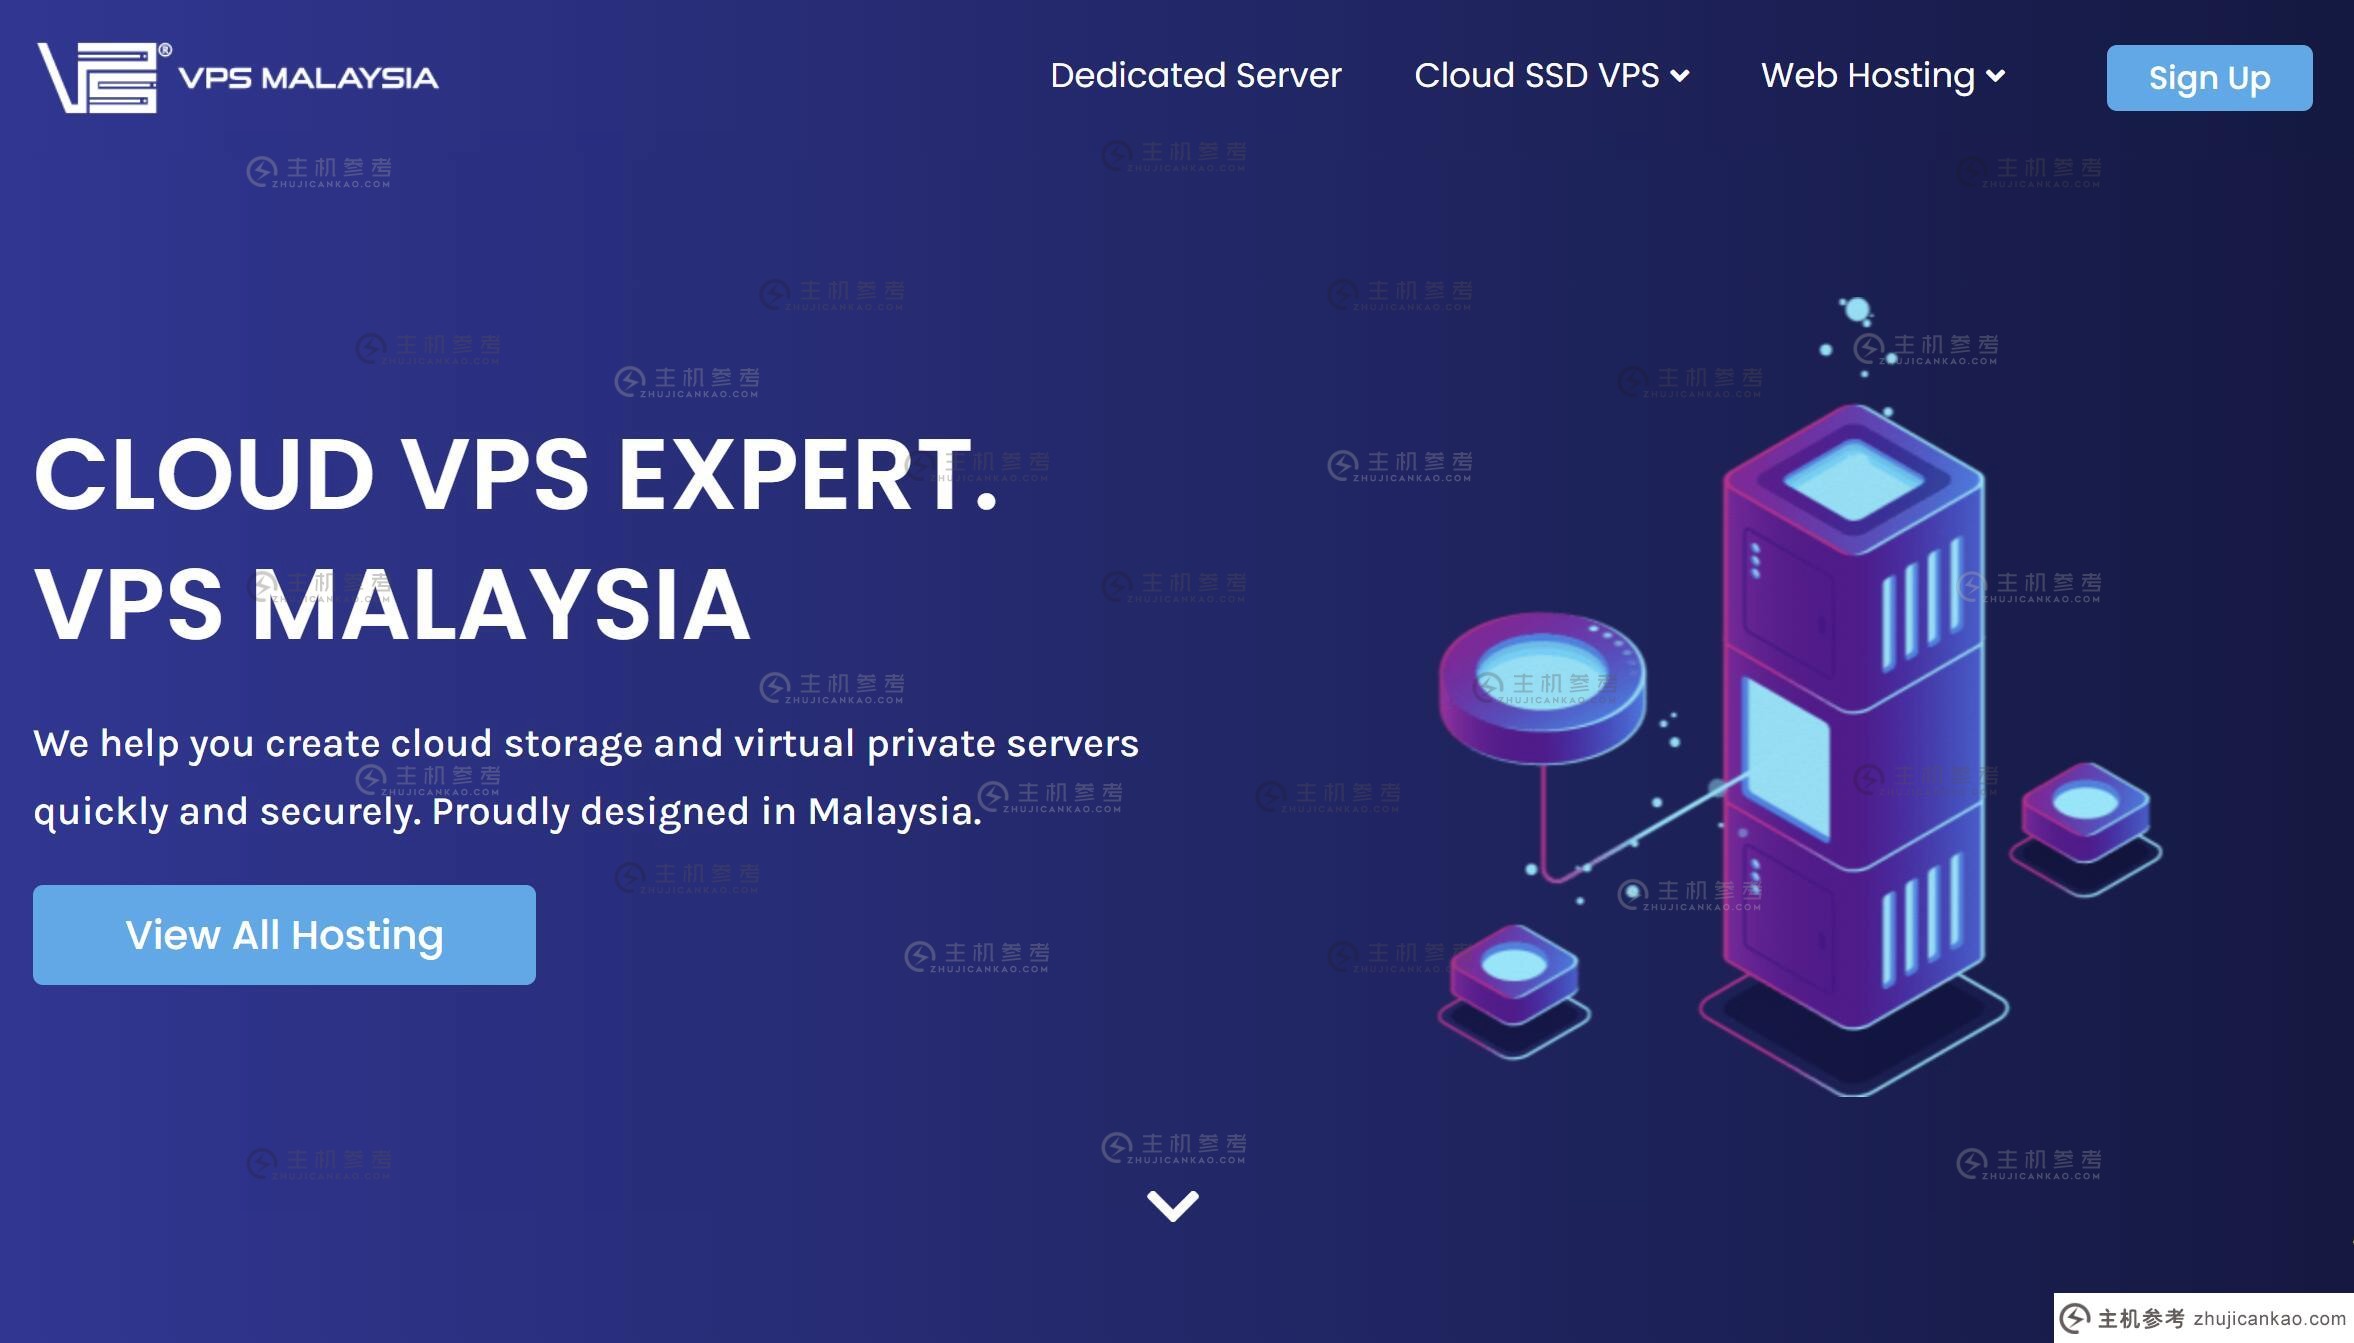 马来西亚VPS推荐 - VPS Malaysia